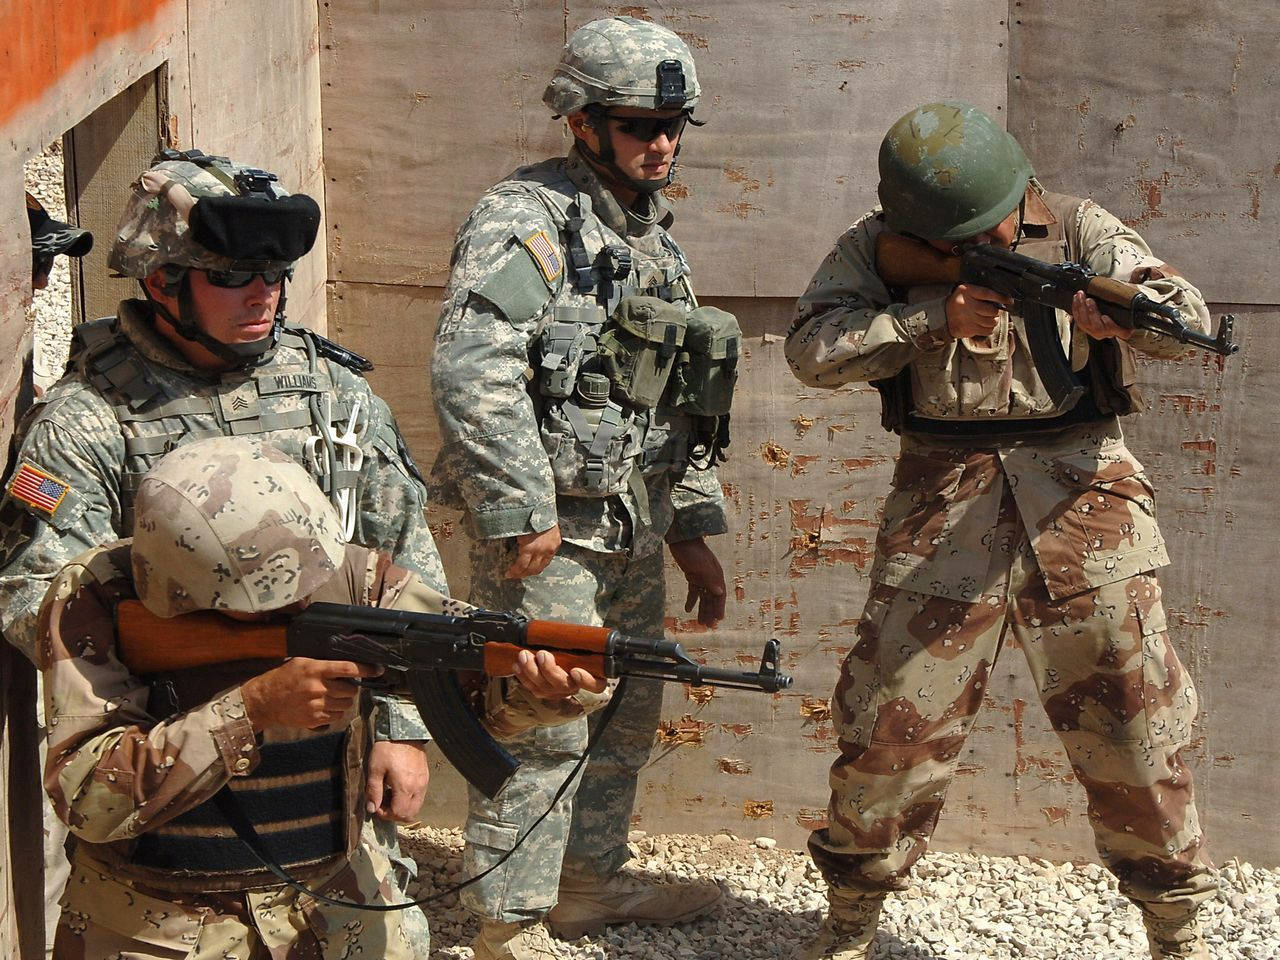 Wallpaper: Soldater i US Army trening soldater bakgrunn. Wallpaper